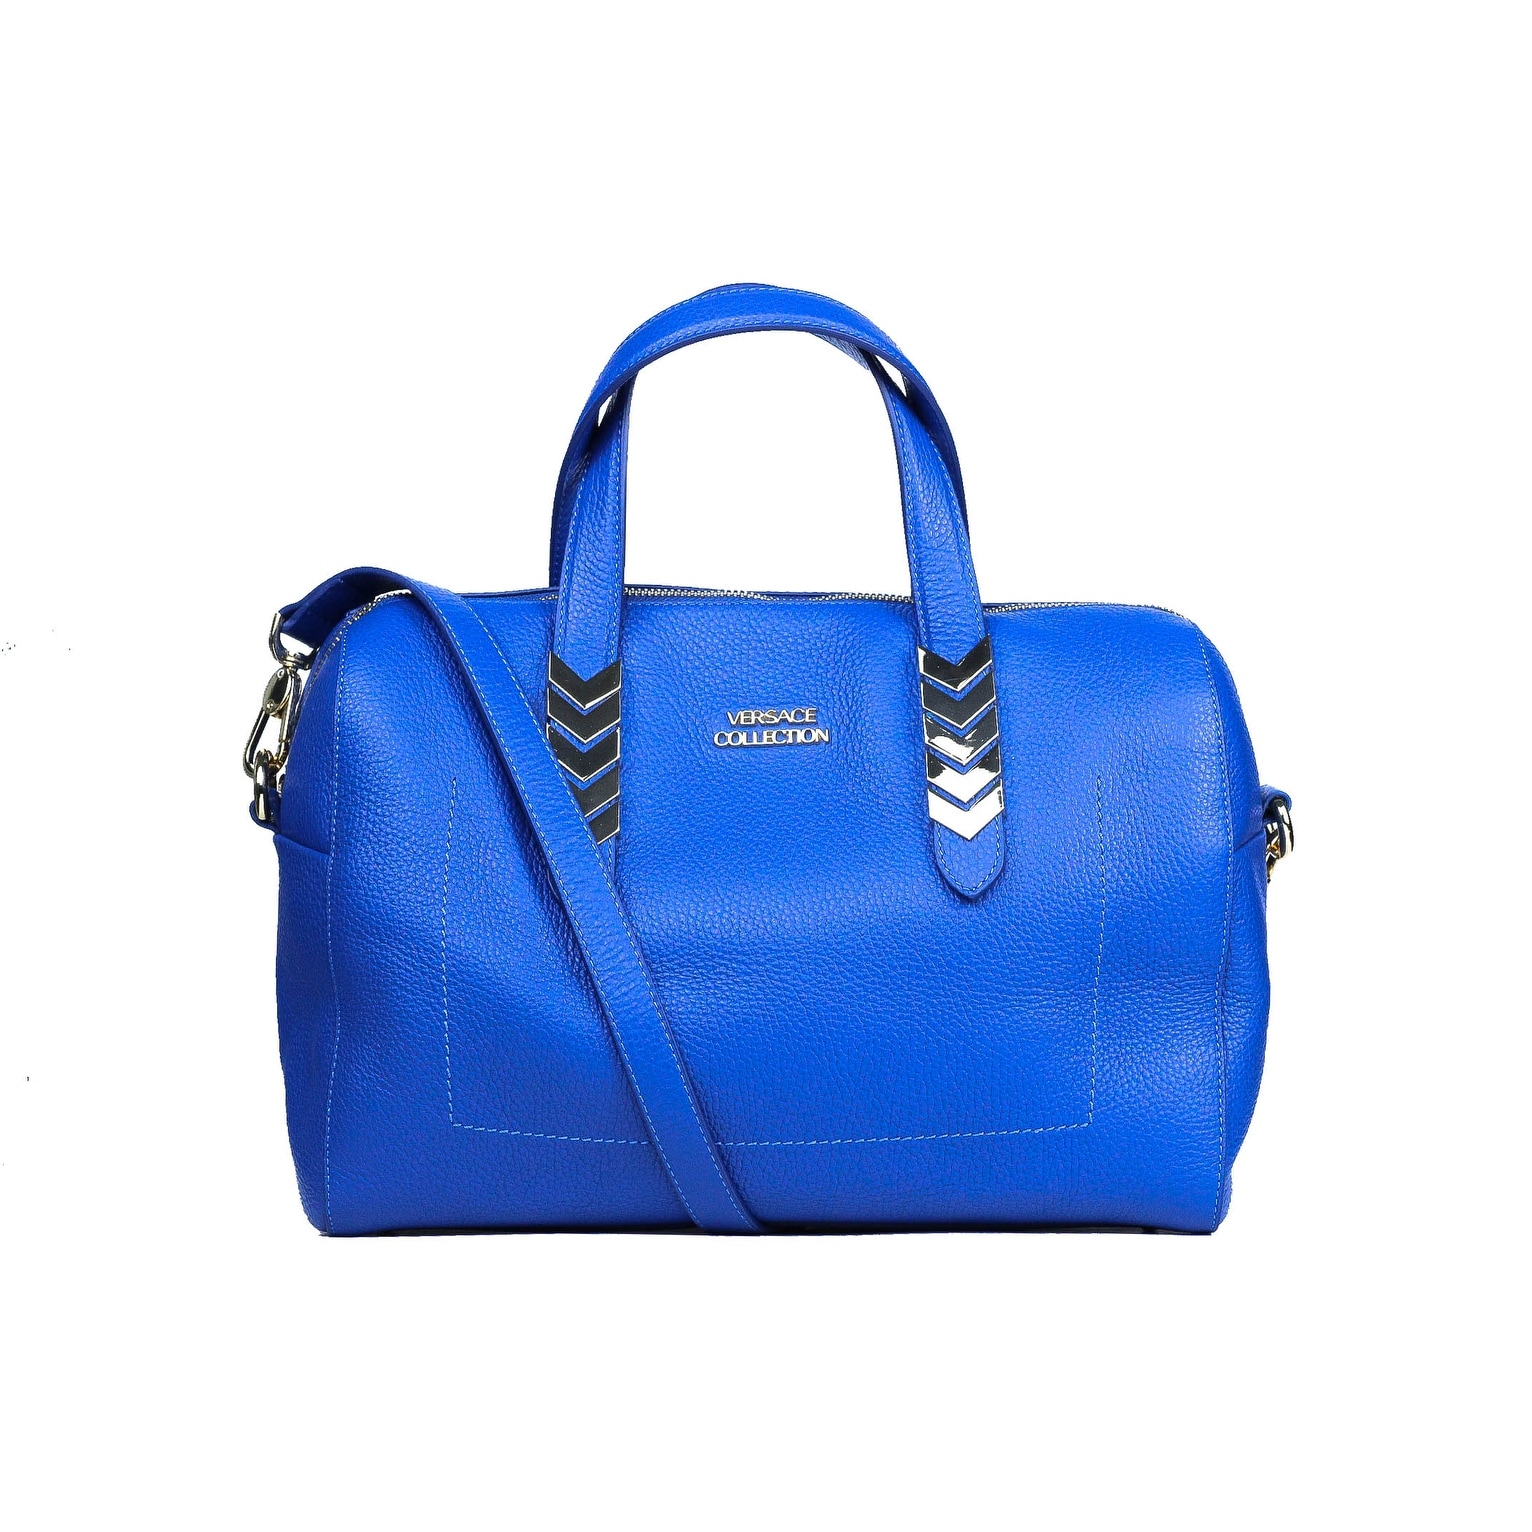 Versace collection. Сумка Версаче голубая. Сумка Версаче коллекшн. Синяя сумка Versace collection. Bag Versace 2020 collection Blue.